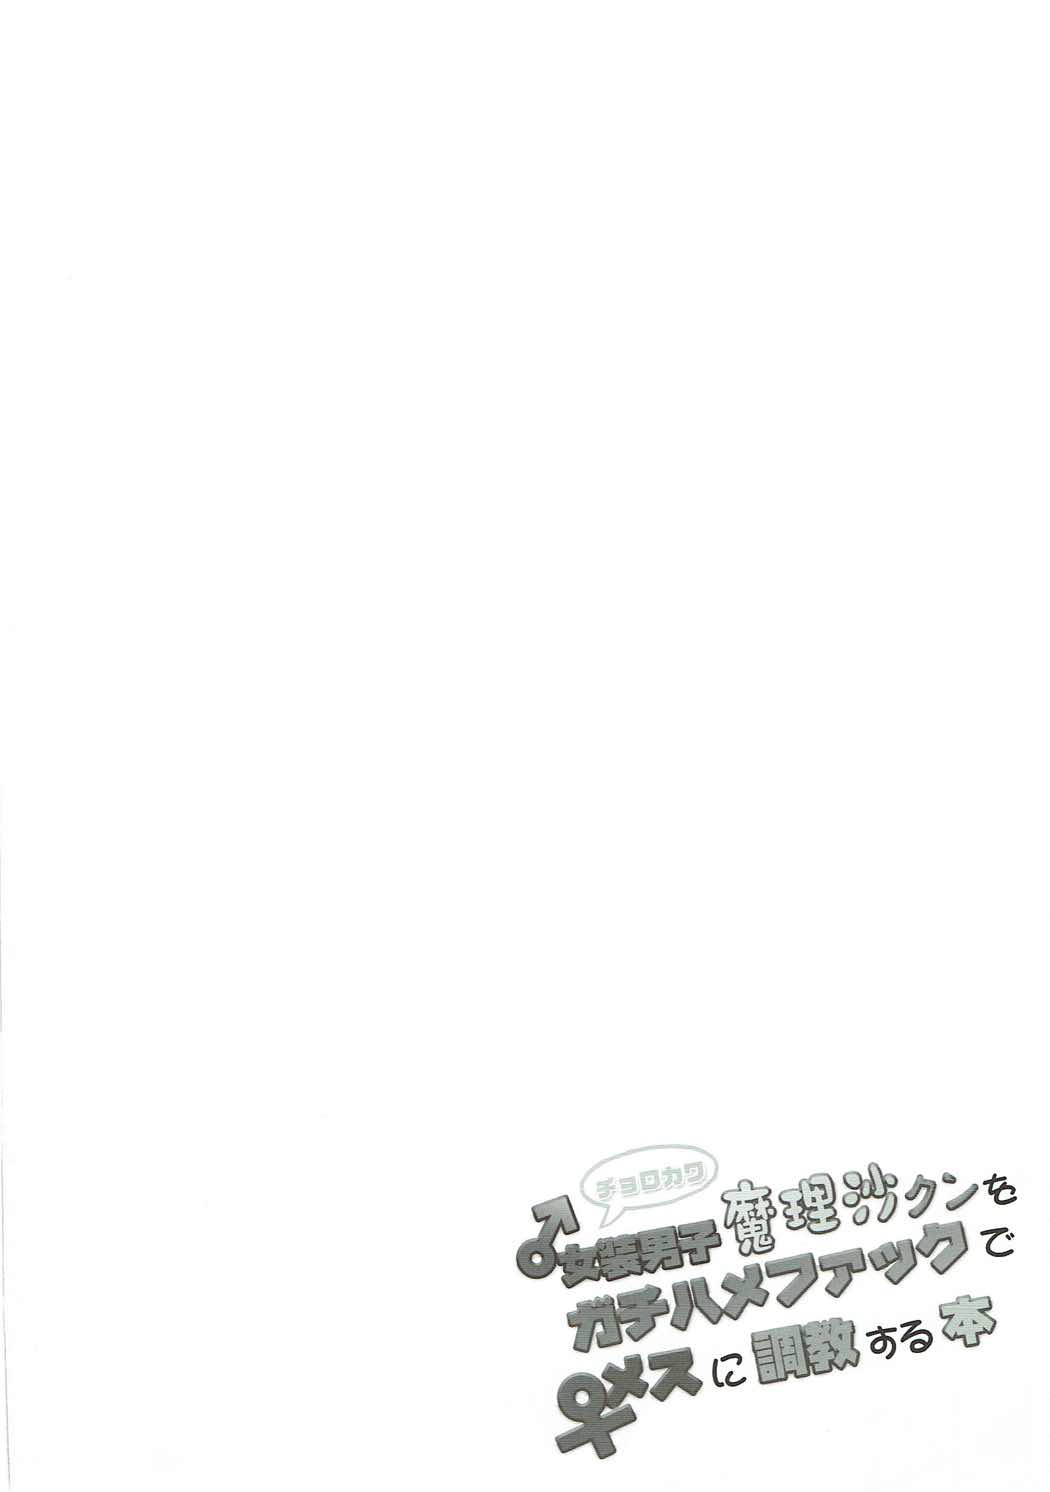 (Touhou Project) (C92) [Stapspats (翡翠石)] チョロカワ女装男子魔理沙クンをガチハメファックでメスに調教する本 (東方Project) [英訳]